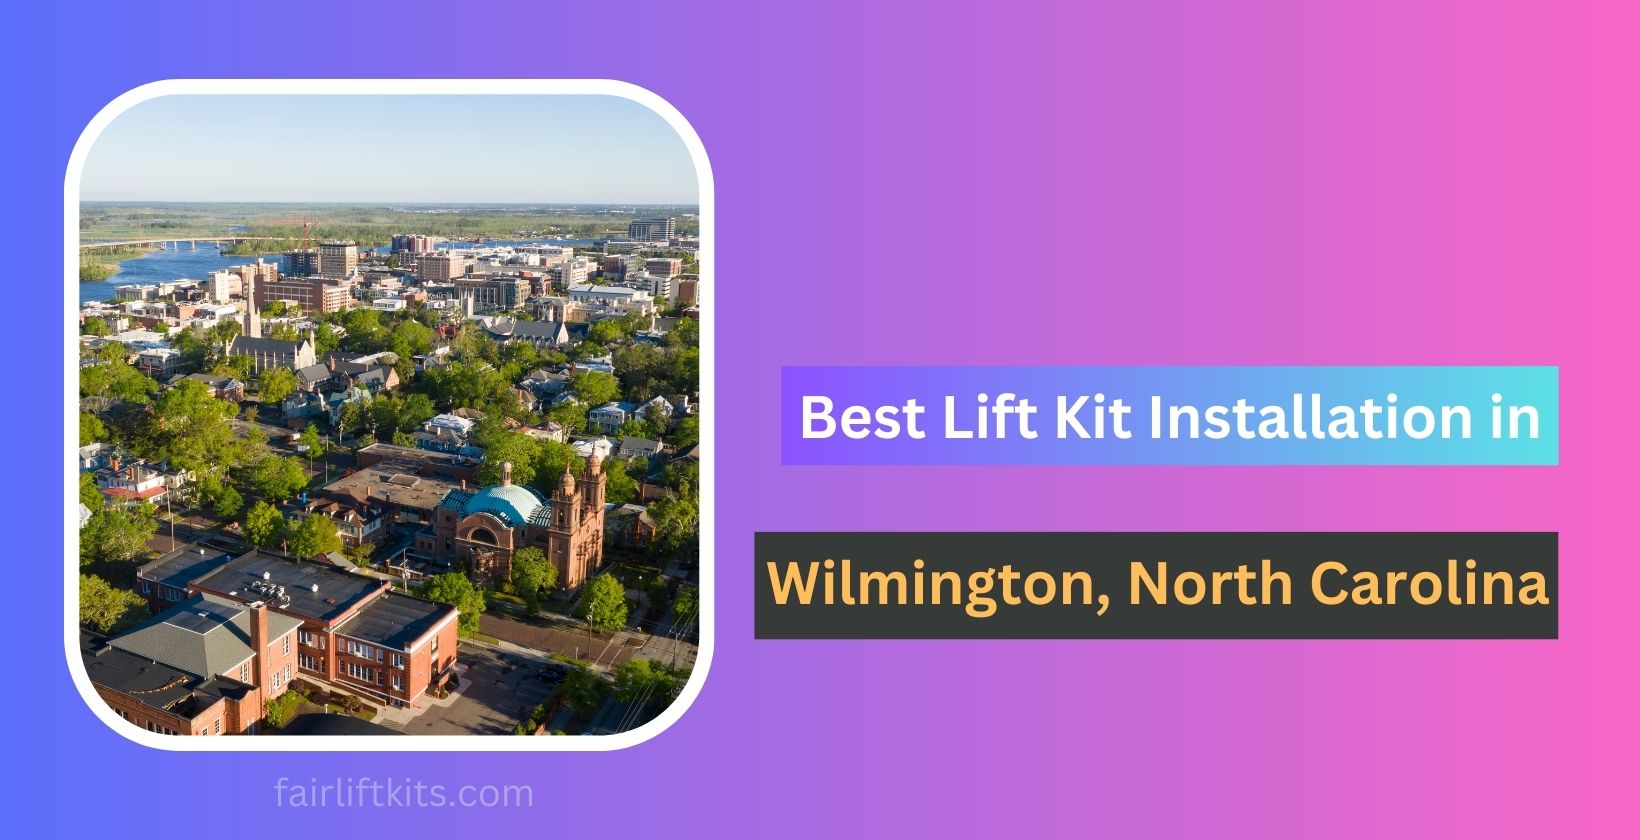 10 Best Lift Kit Installation in Wilmington